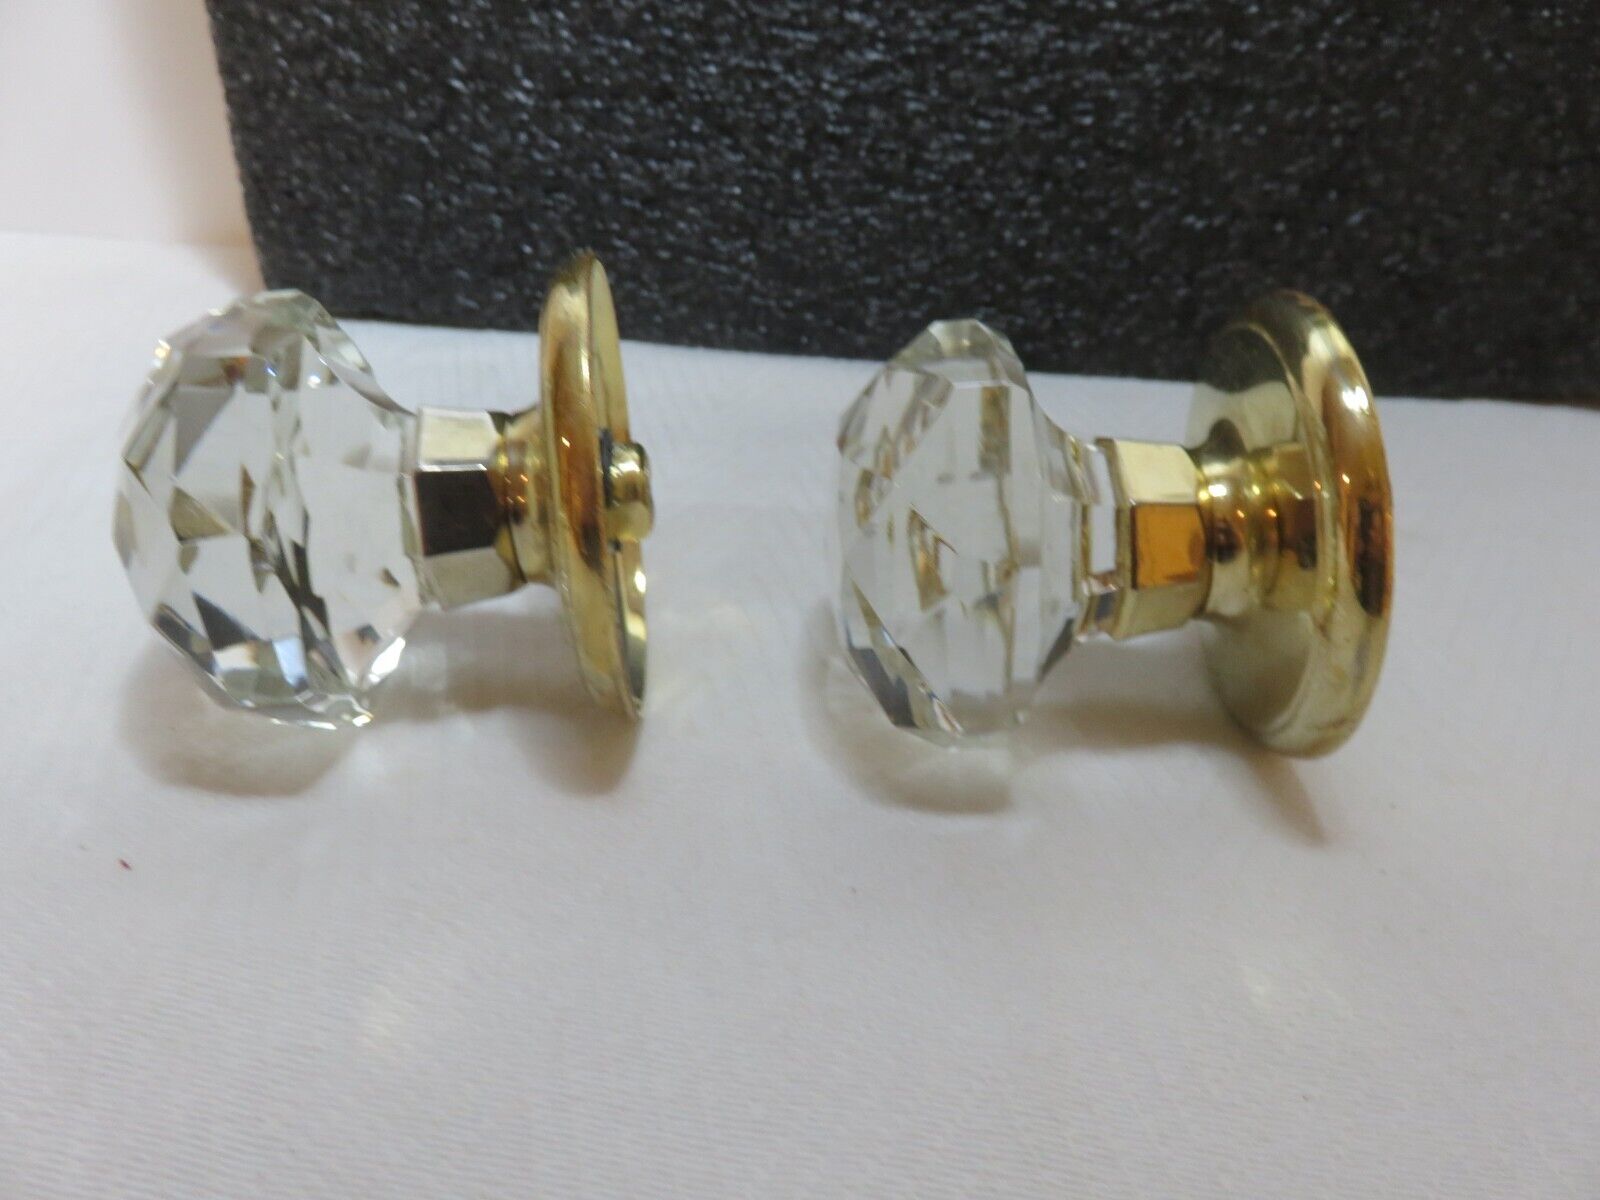 Vintage Gainsborough certizing crystal ? door knobs made in Australia